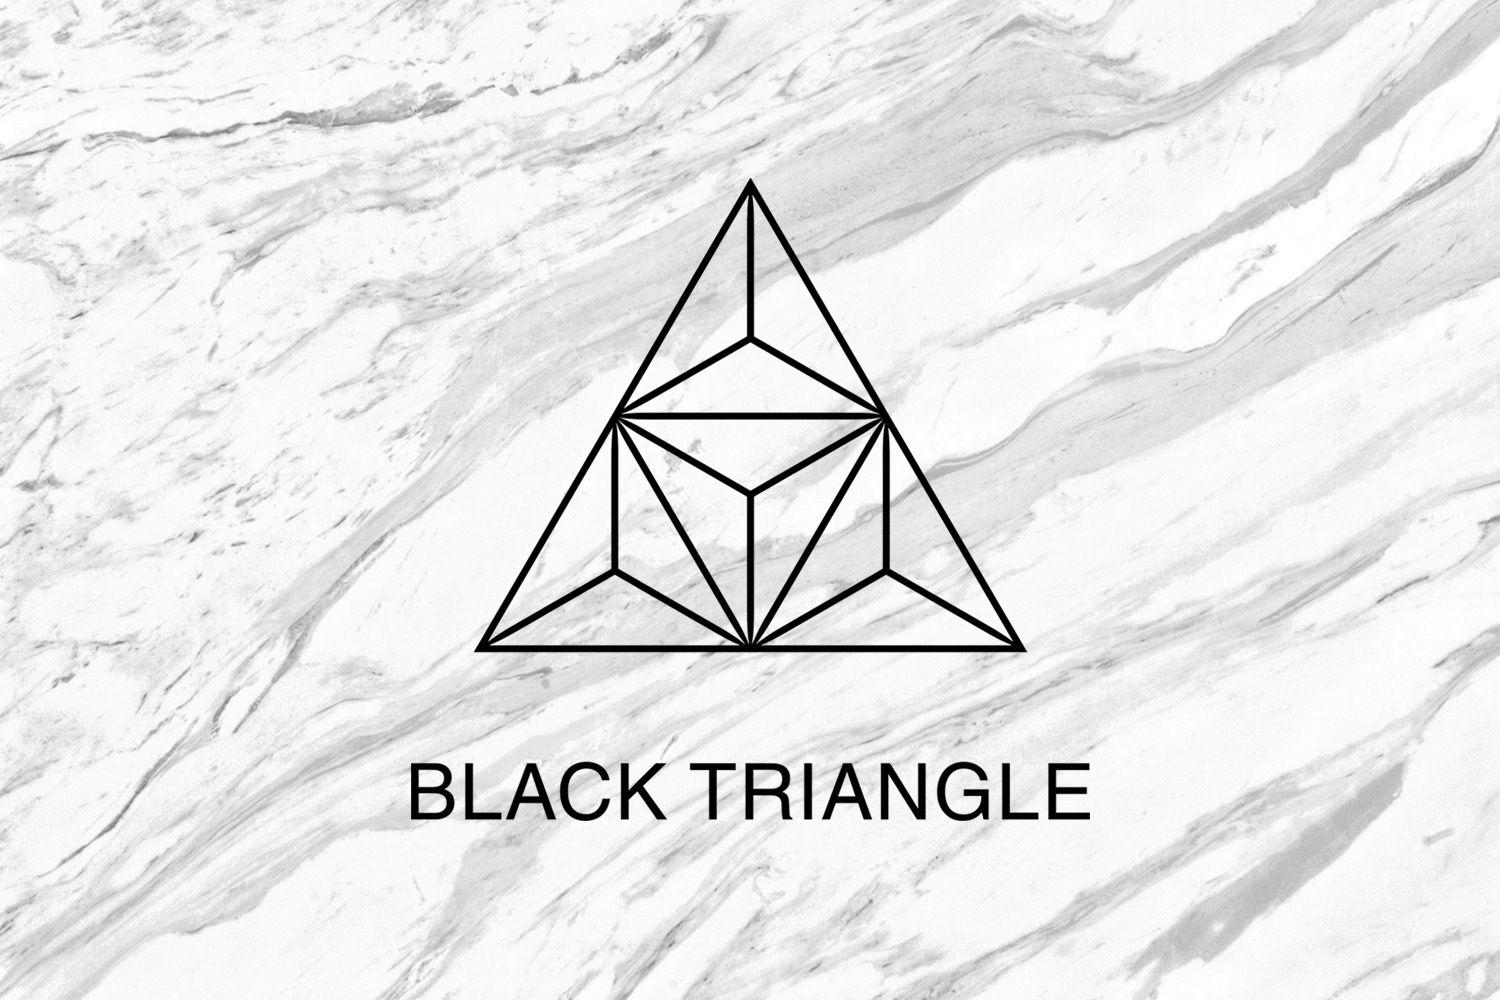 Black Triangle Pyramid Logo - Robert Bazaev